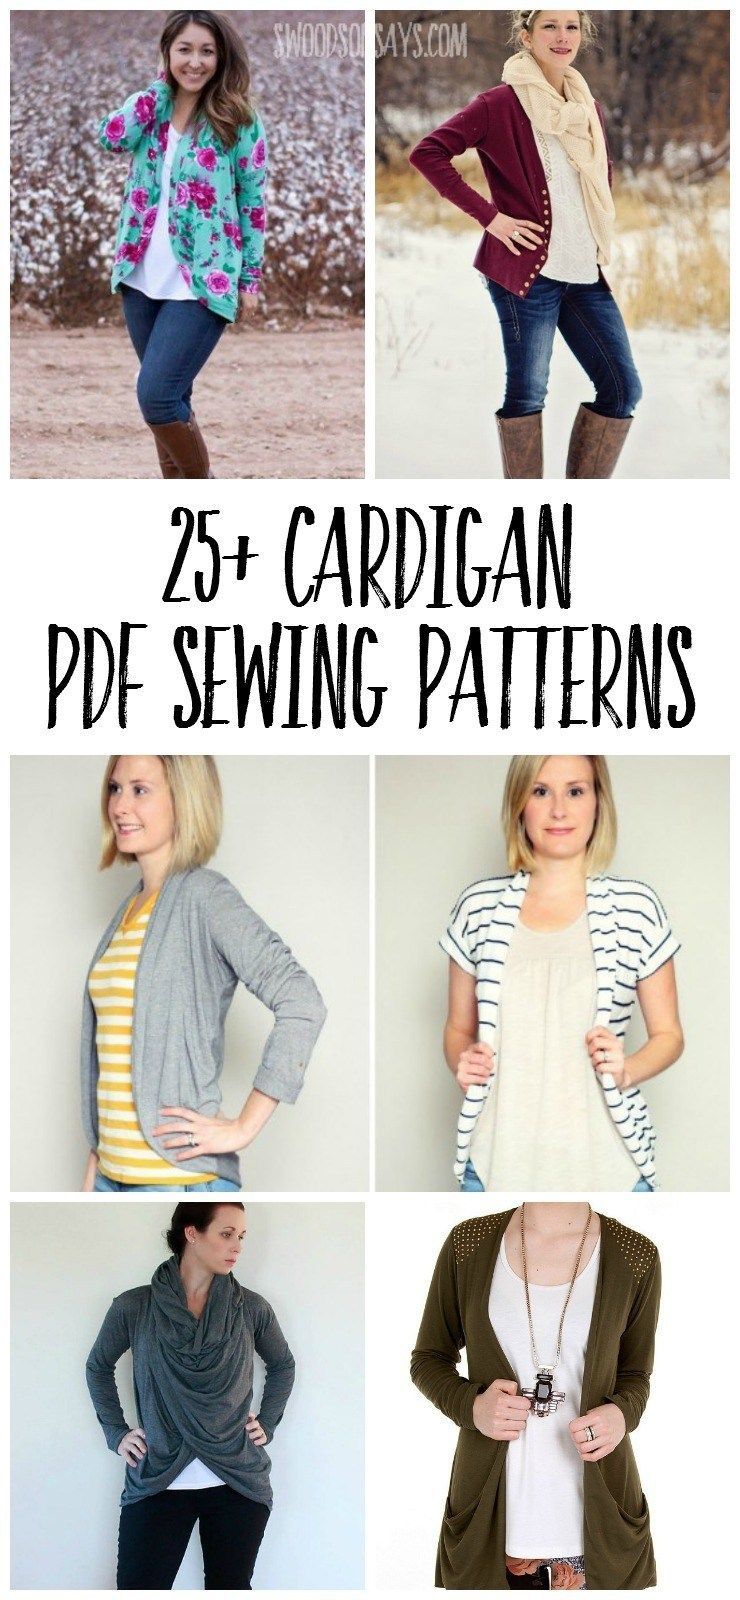 25+ cardigan patterns to sew - 25+ cardigan patterns to sew -   16 diy Clothes for women ideas